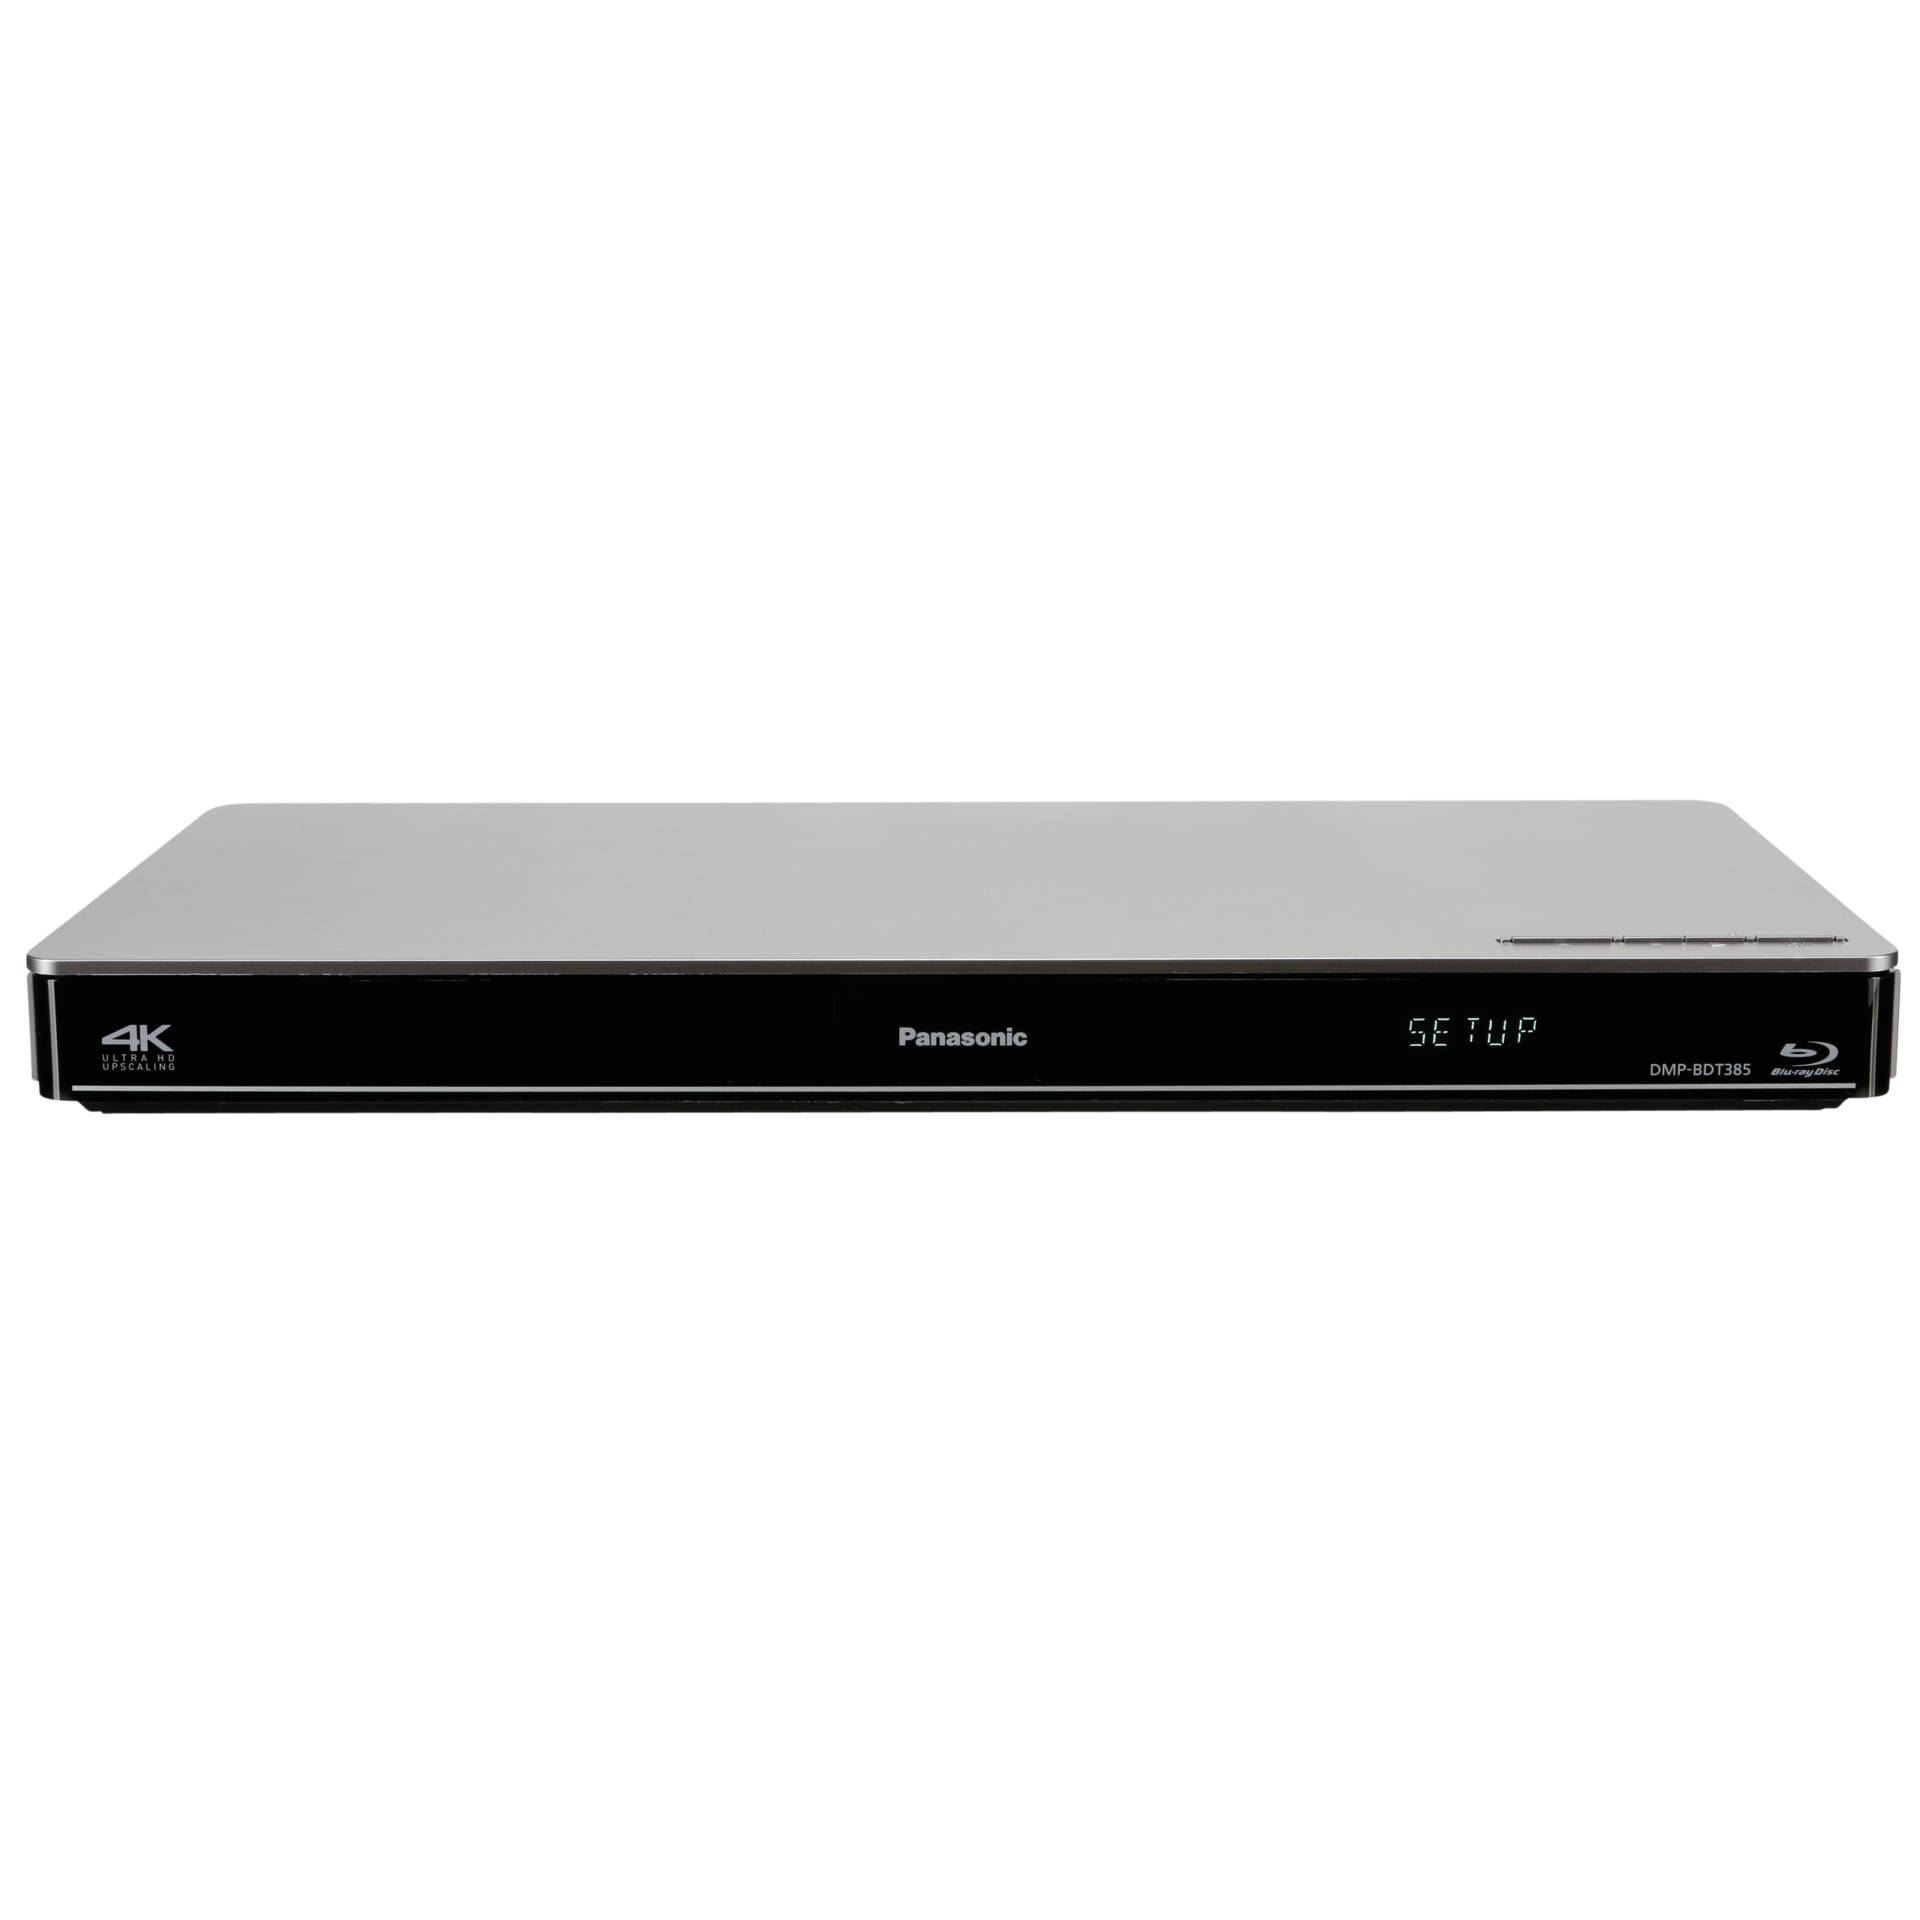 (DMPBDT385EG) Hardware/Electronic -Hochskalierung -Panasonic Blu-ray-Disk-Player -DMP-BDT385 Panasonic -3D -Wi-Fi Ethernet